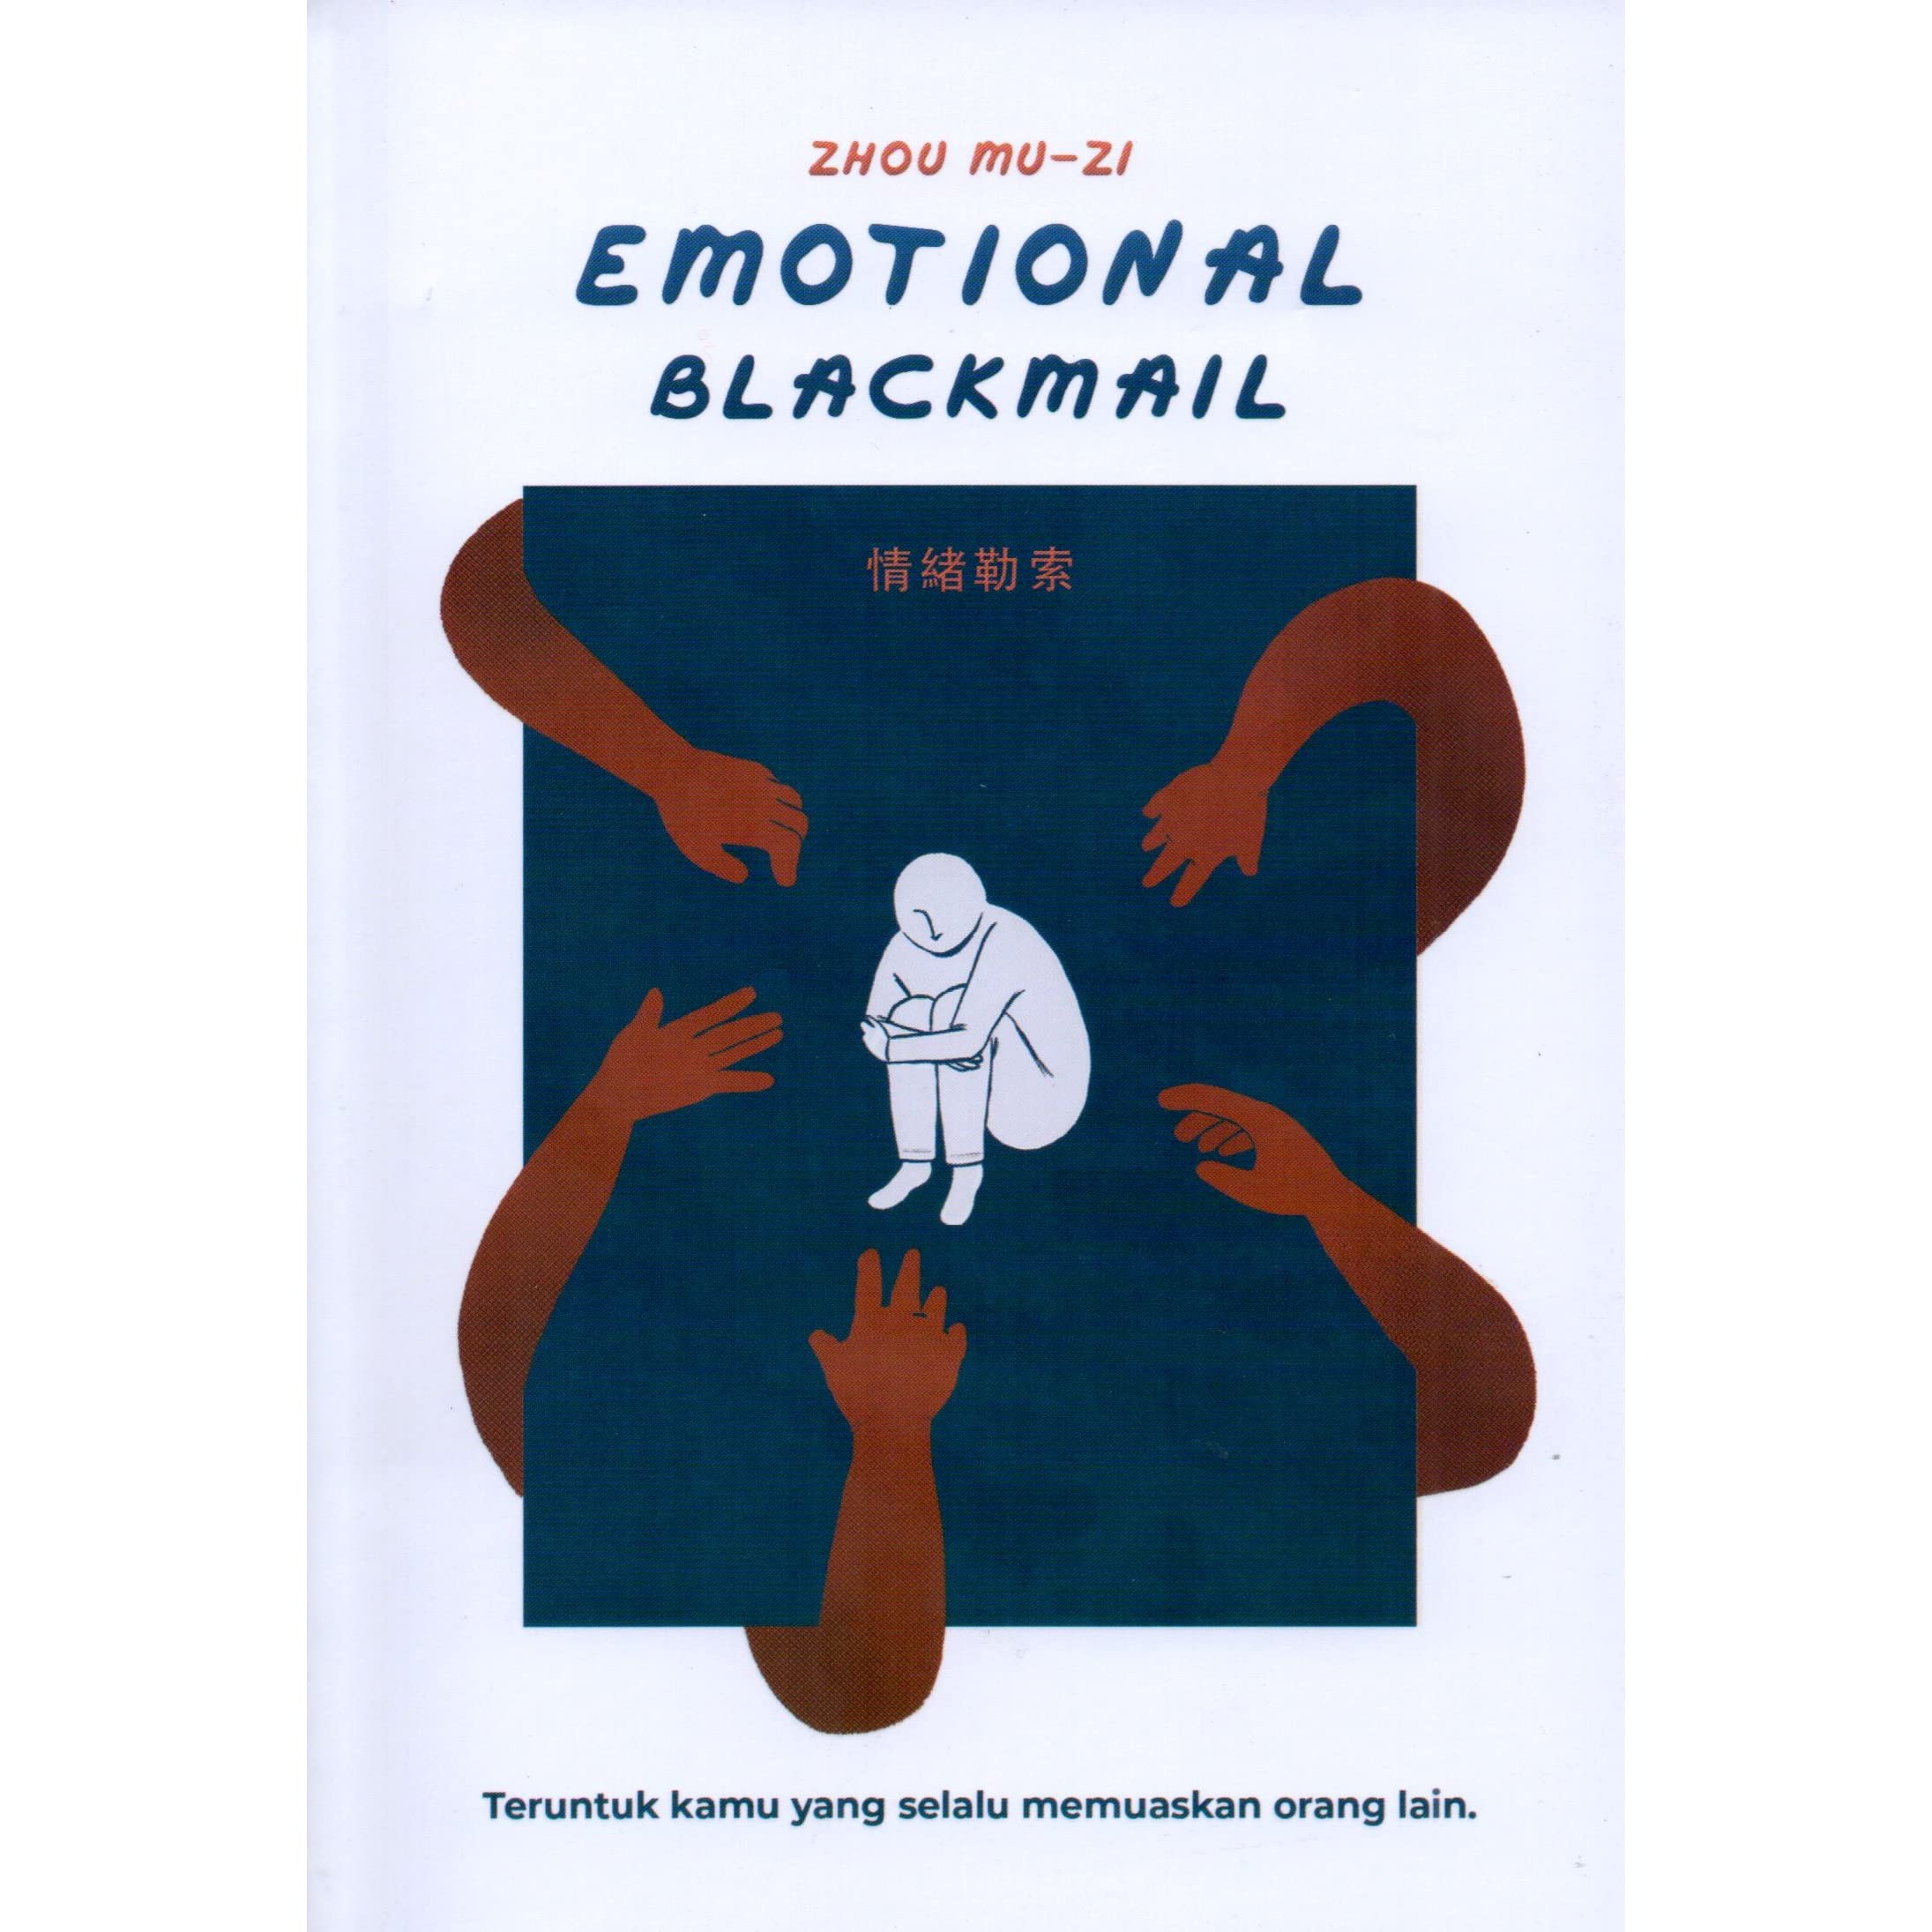 Emotional blackmail